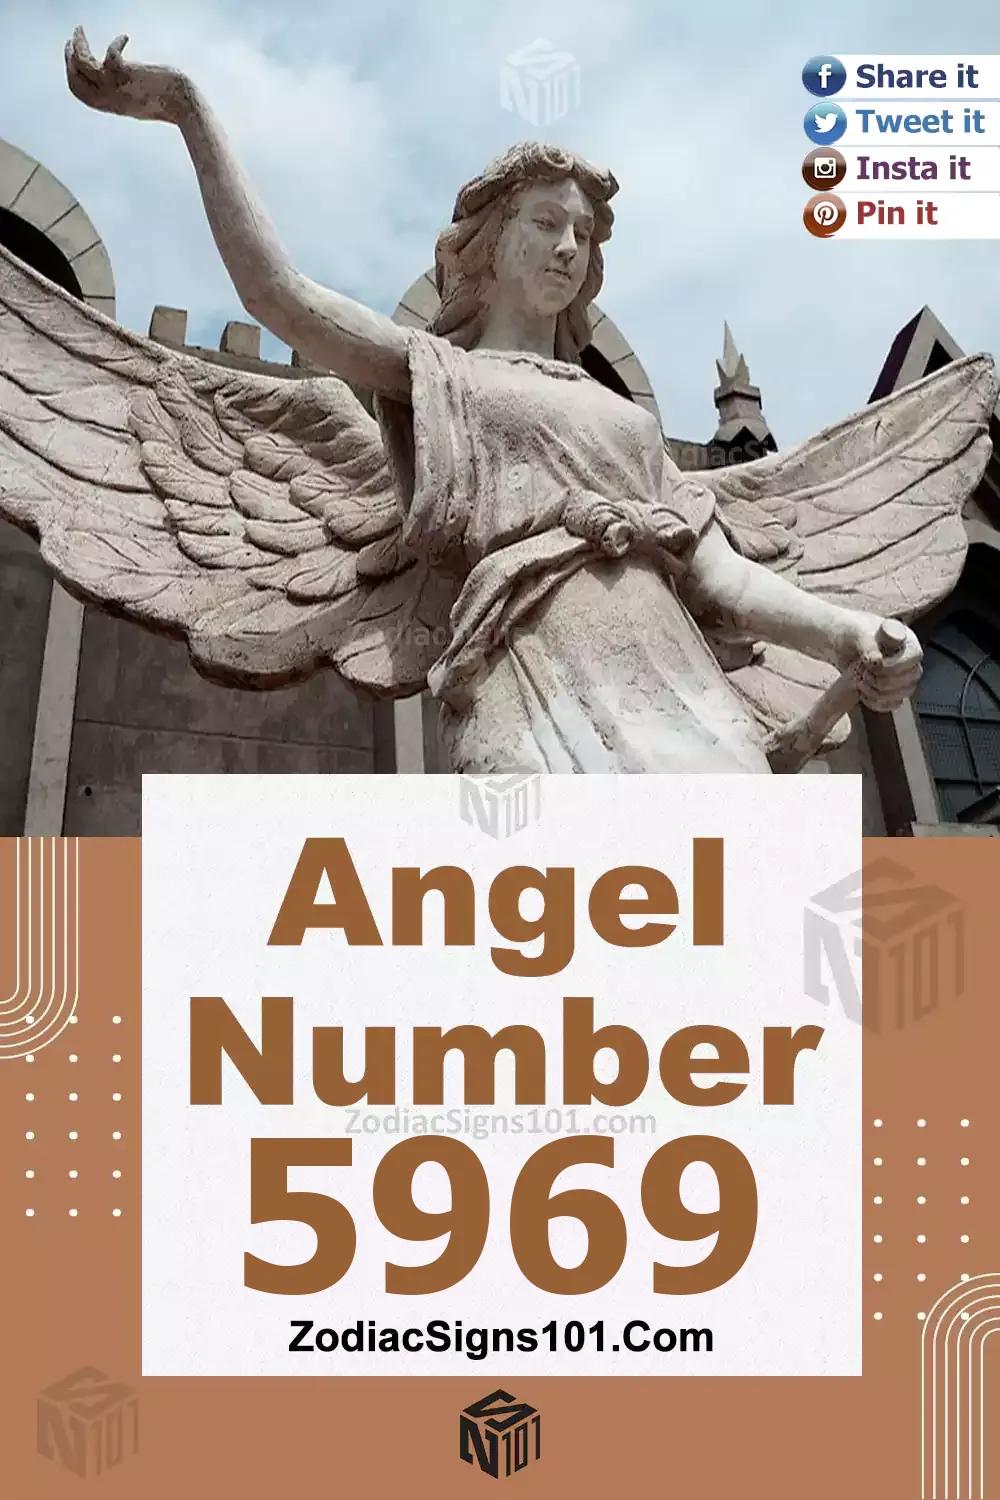 5969-Angel-Number-Meaning.jpg